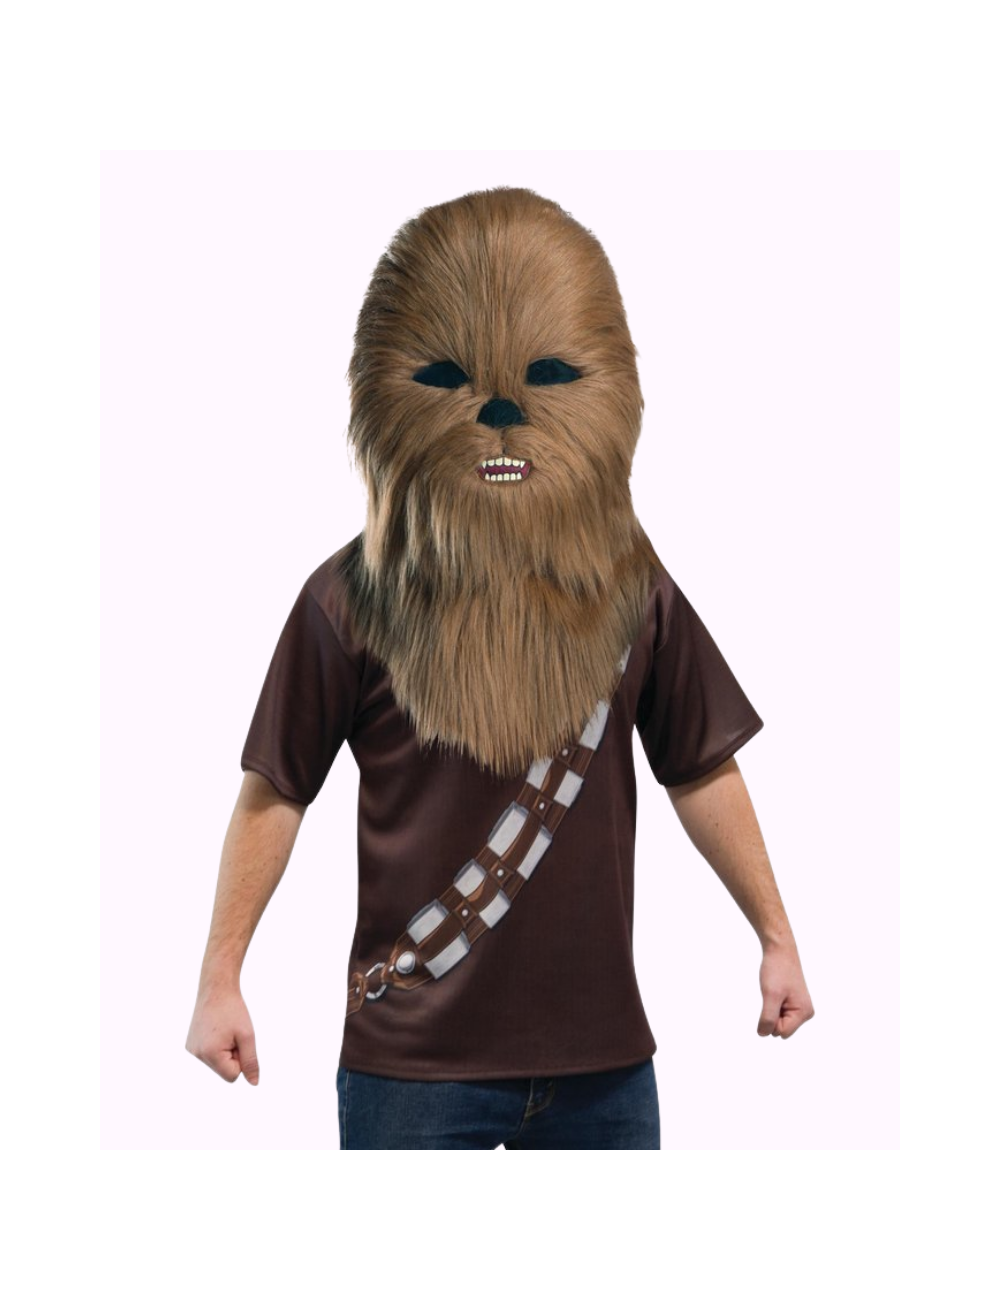 Mascot Costume Adult Chewbacca